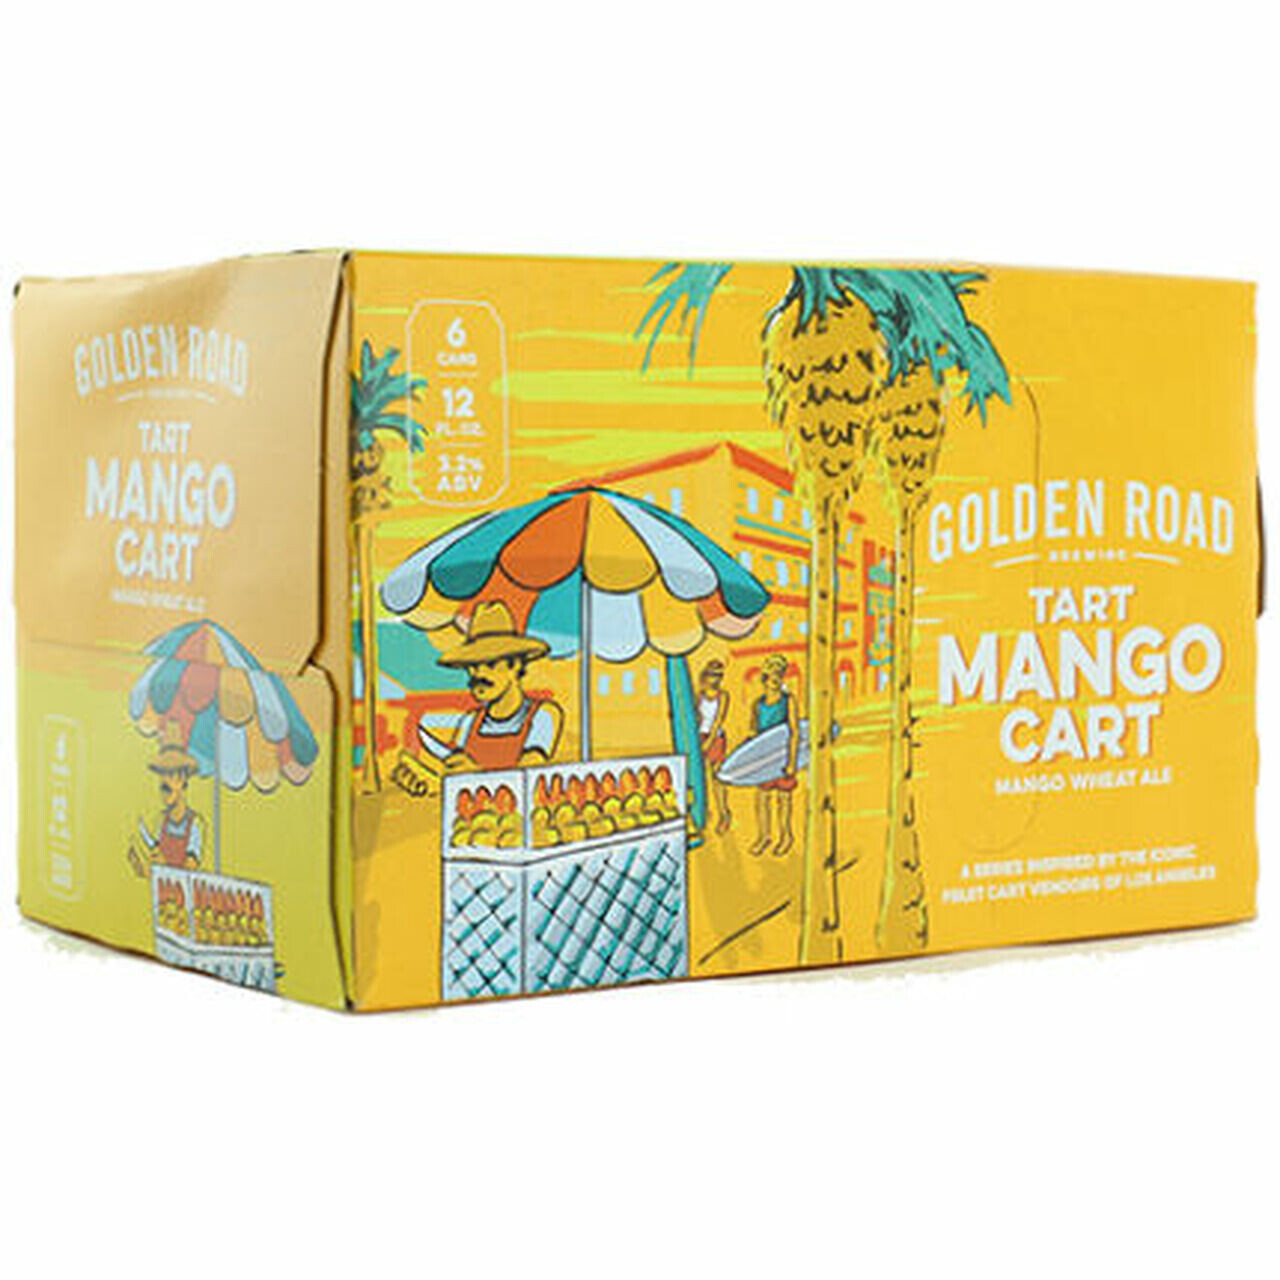 Golden Road Mango 6pk can